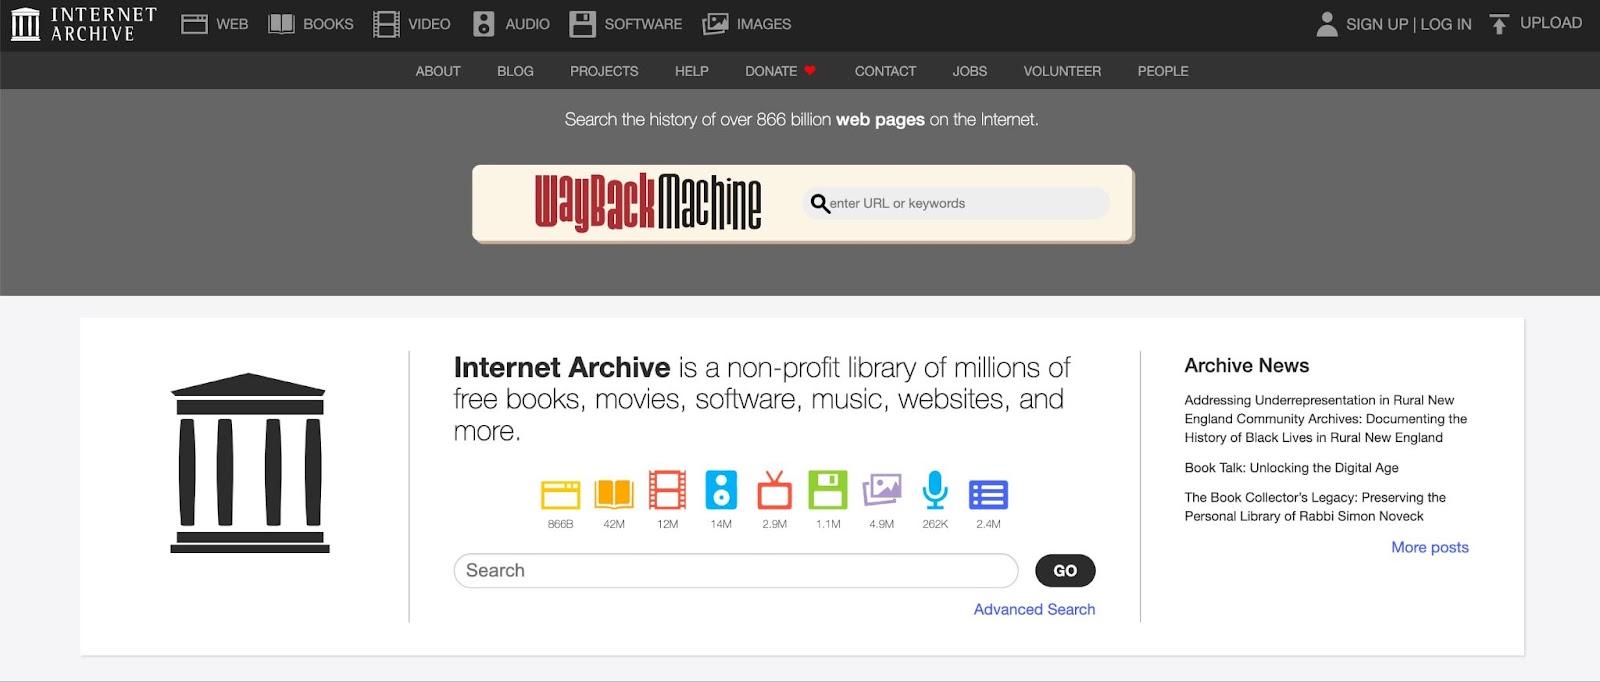 Internet Archive landing page.